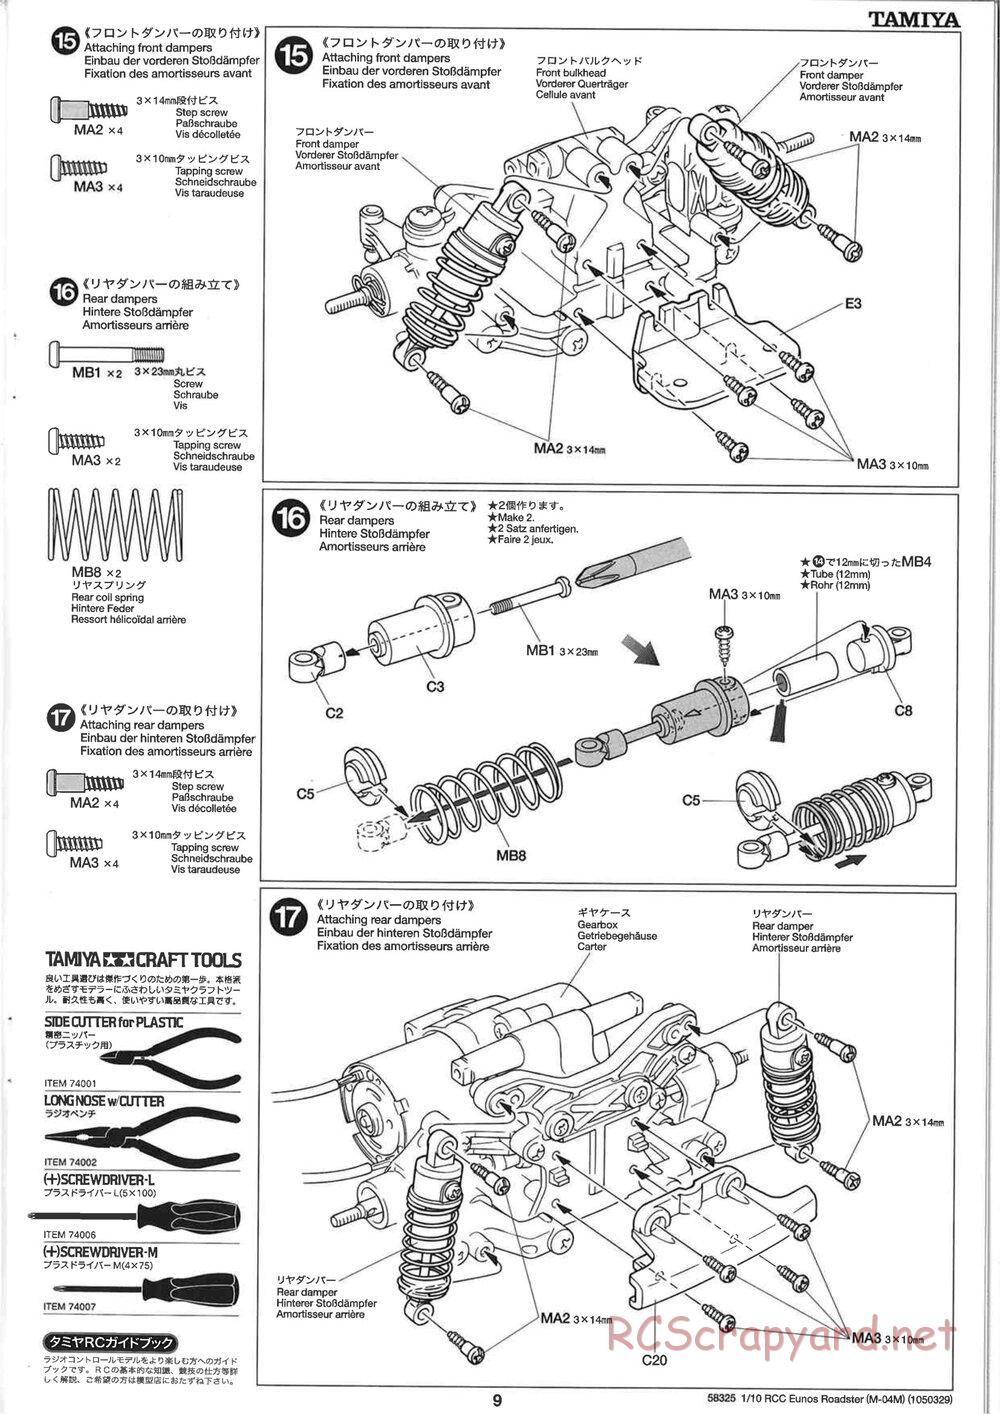 Tamiya - Eunos Roadster - M04M Chassis - Manual - Page 9